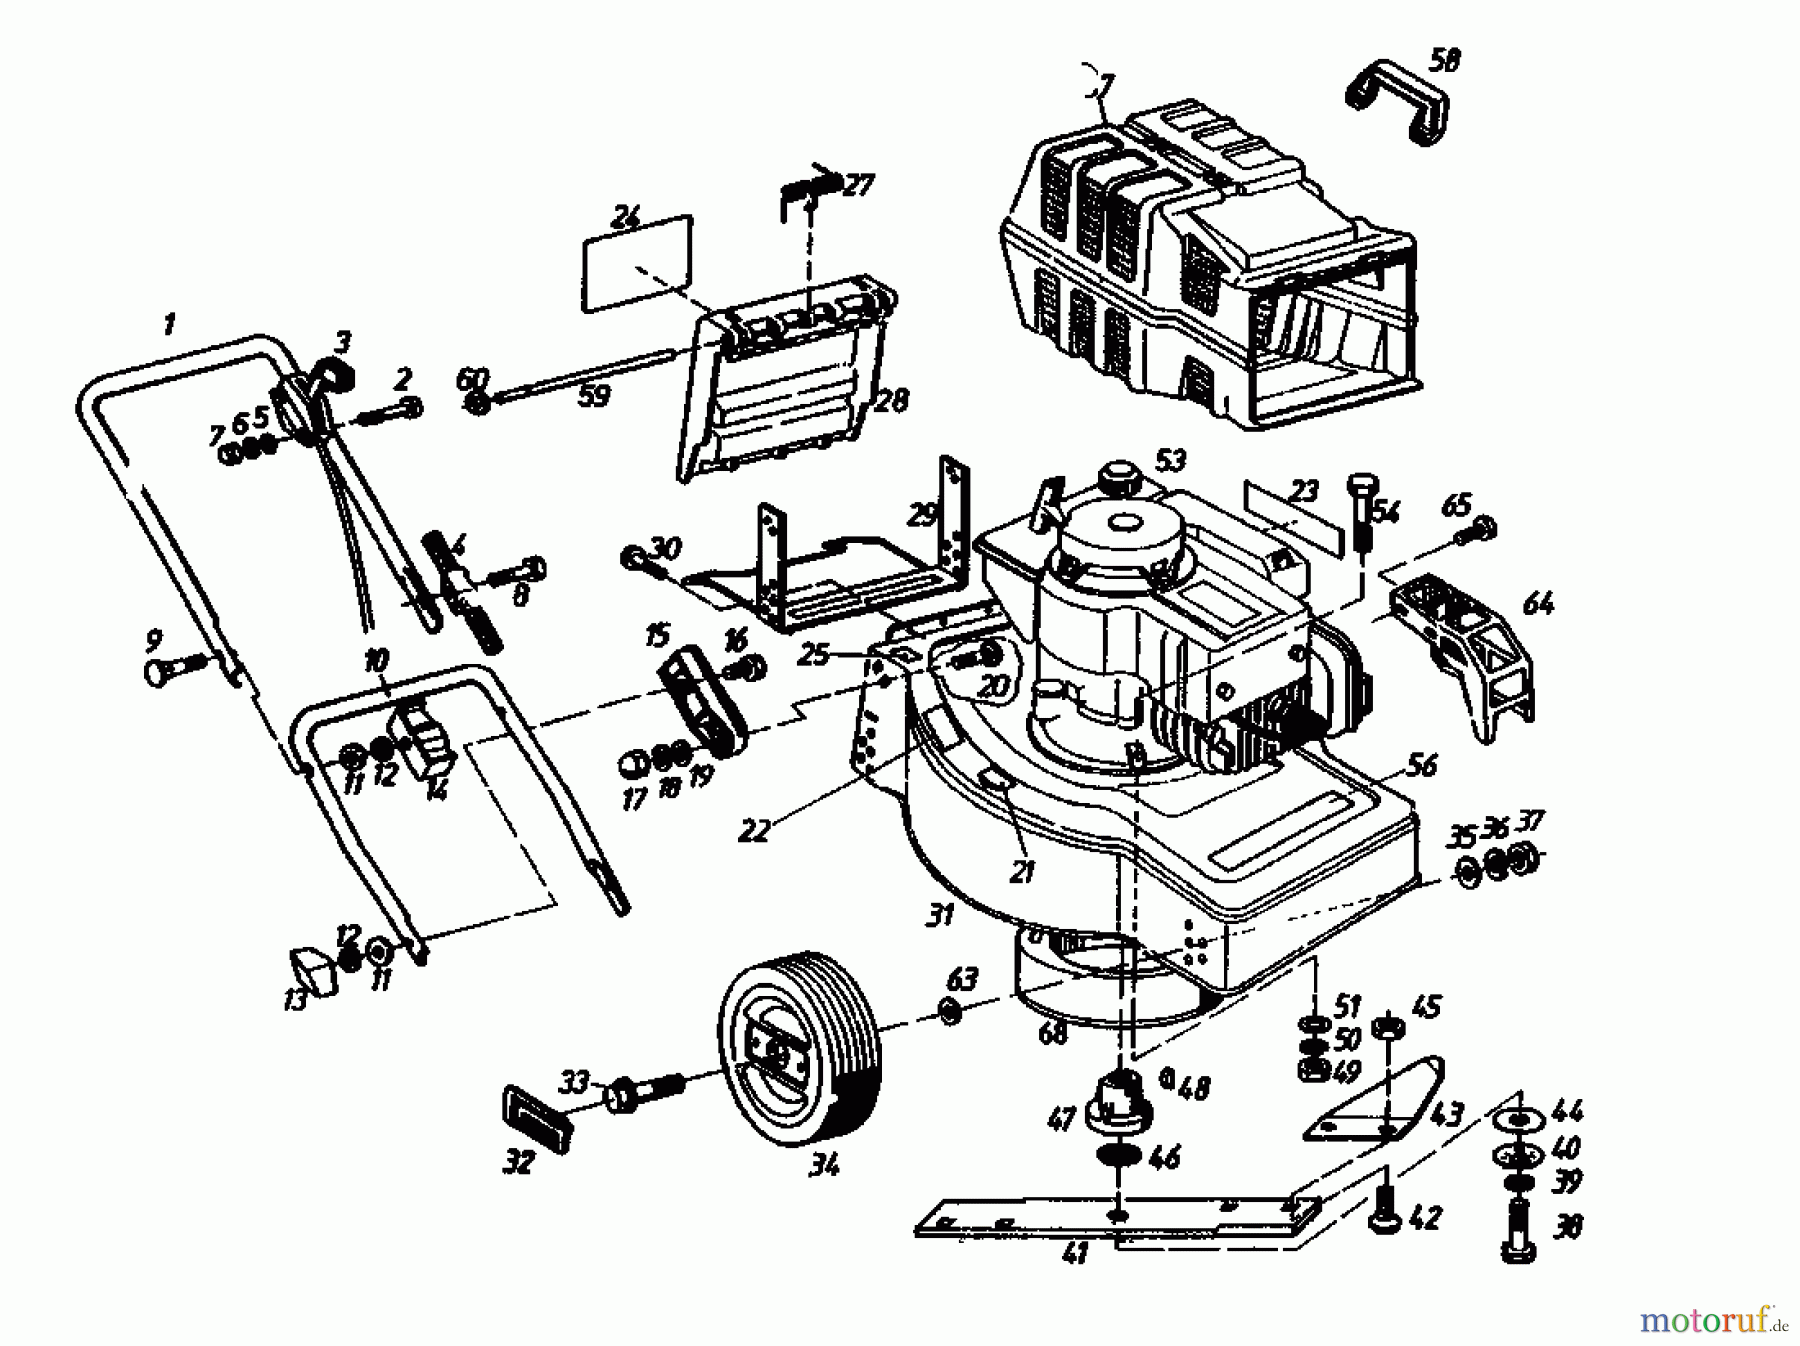  Gutbrod Petrol mower TURBO B 02893.01  (1990) Basic machine